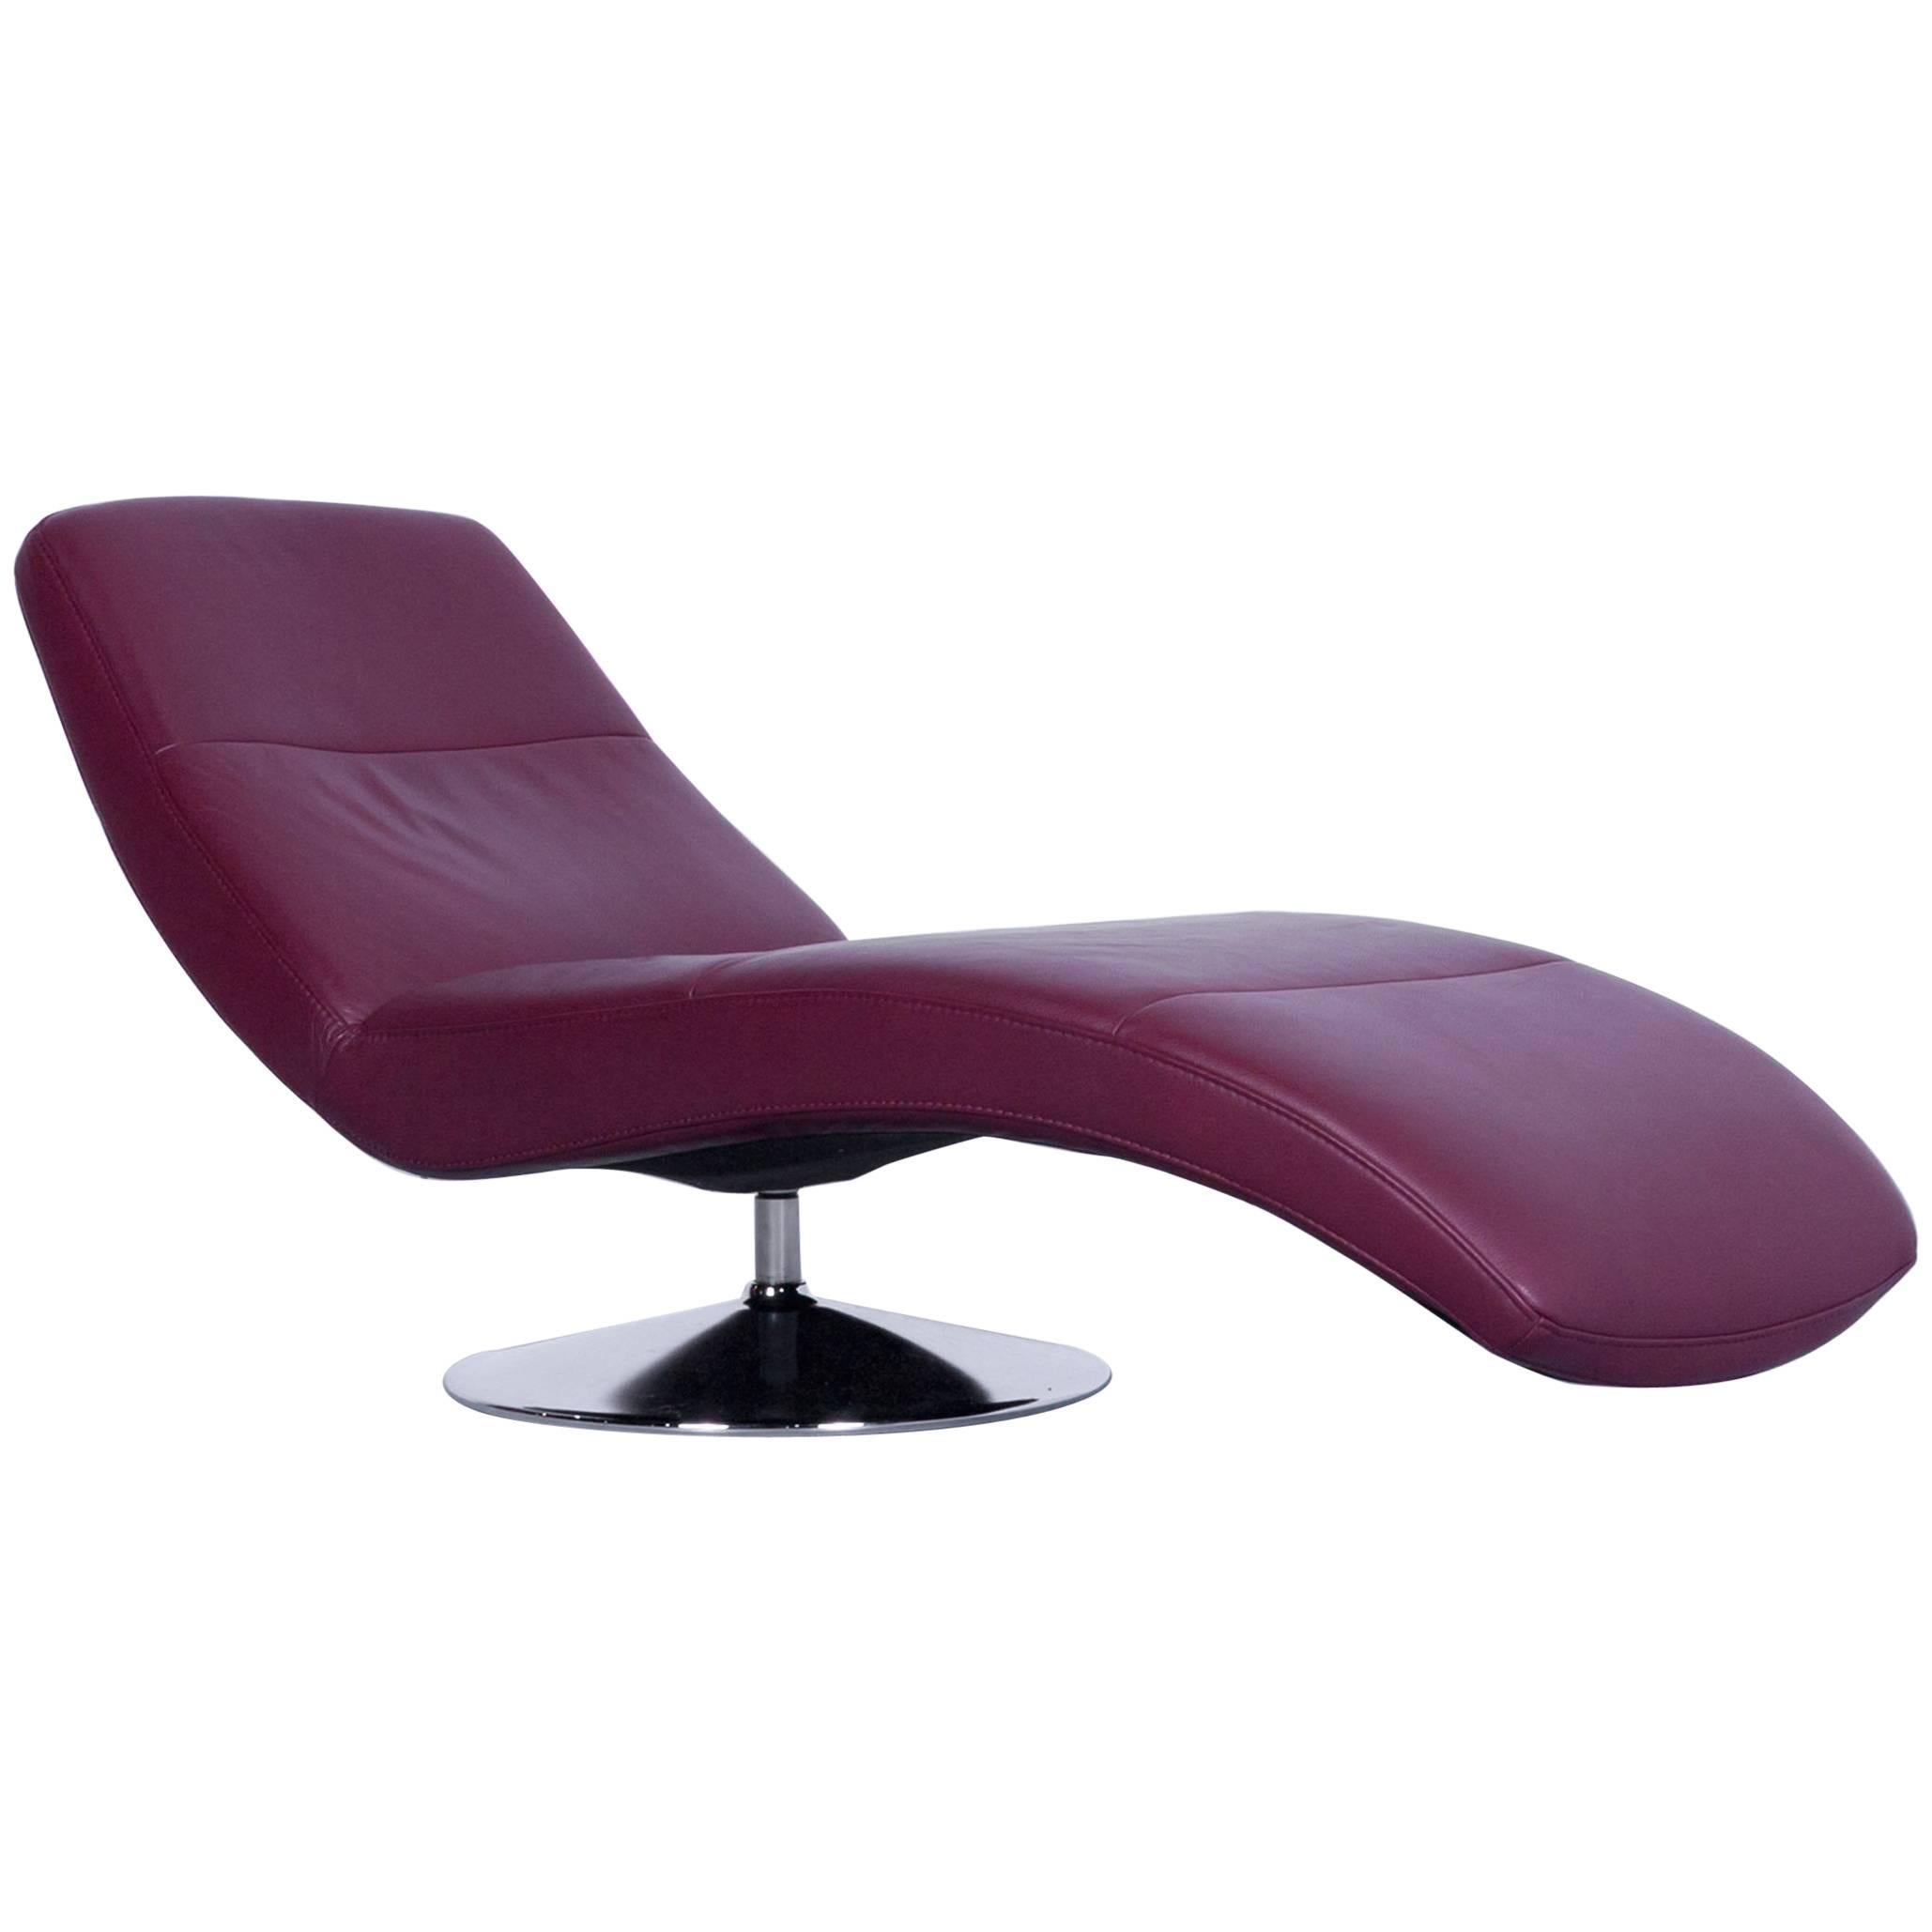 Ewald Schillig Slice daybed Designer Recliner Chair Leather Red Bordeaux For Sale